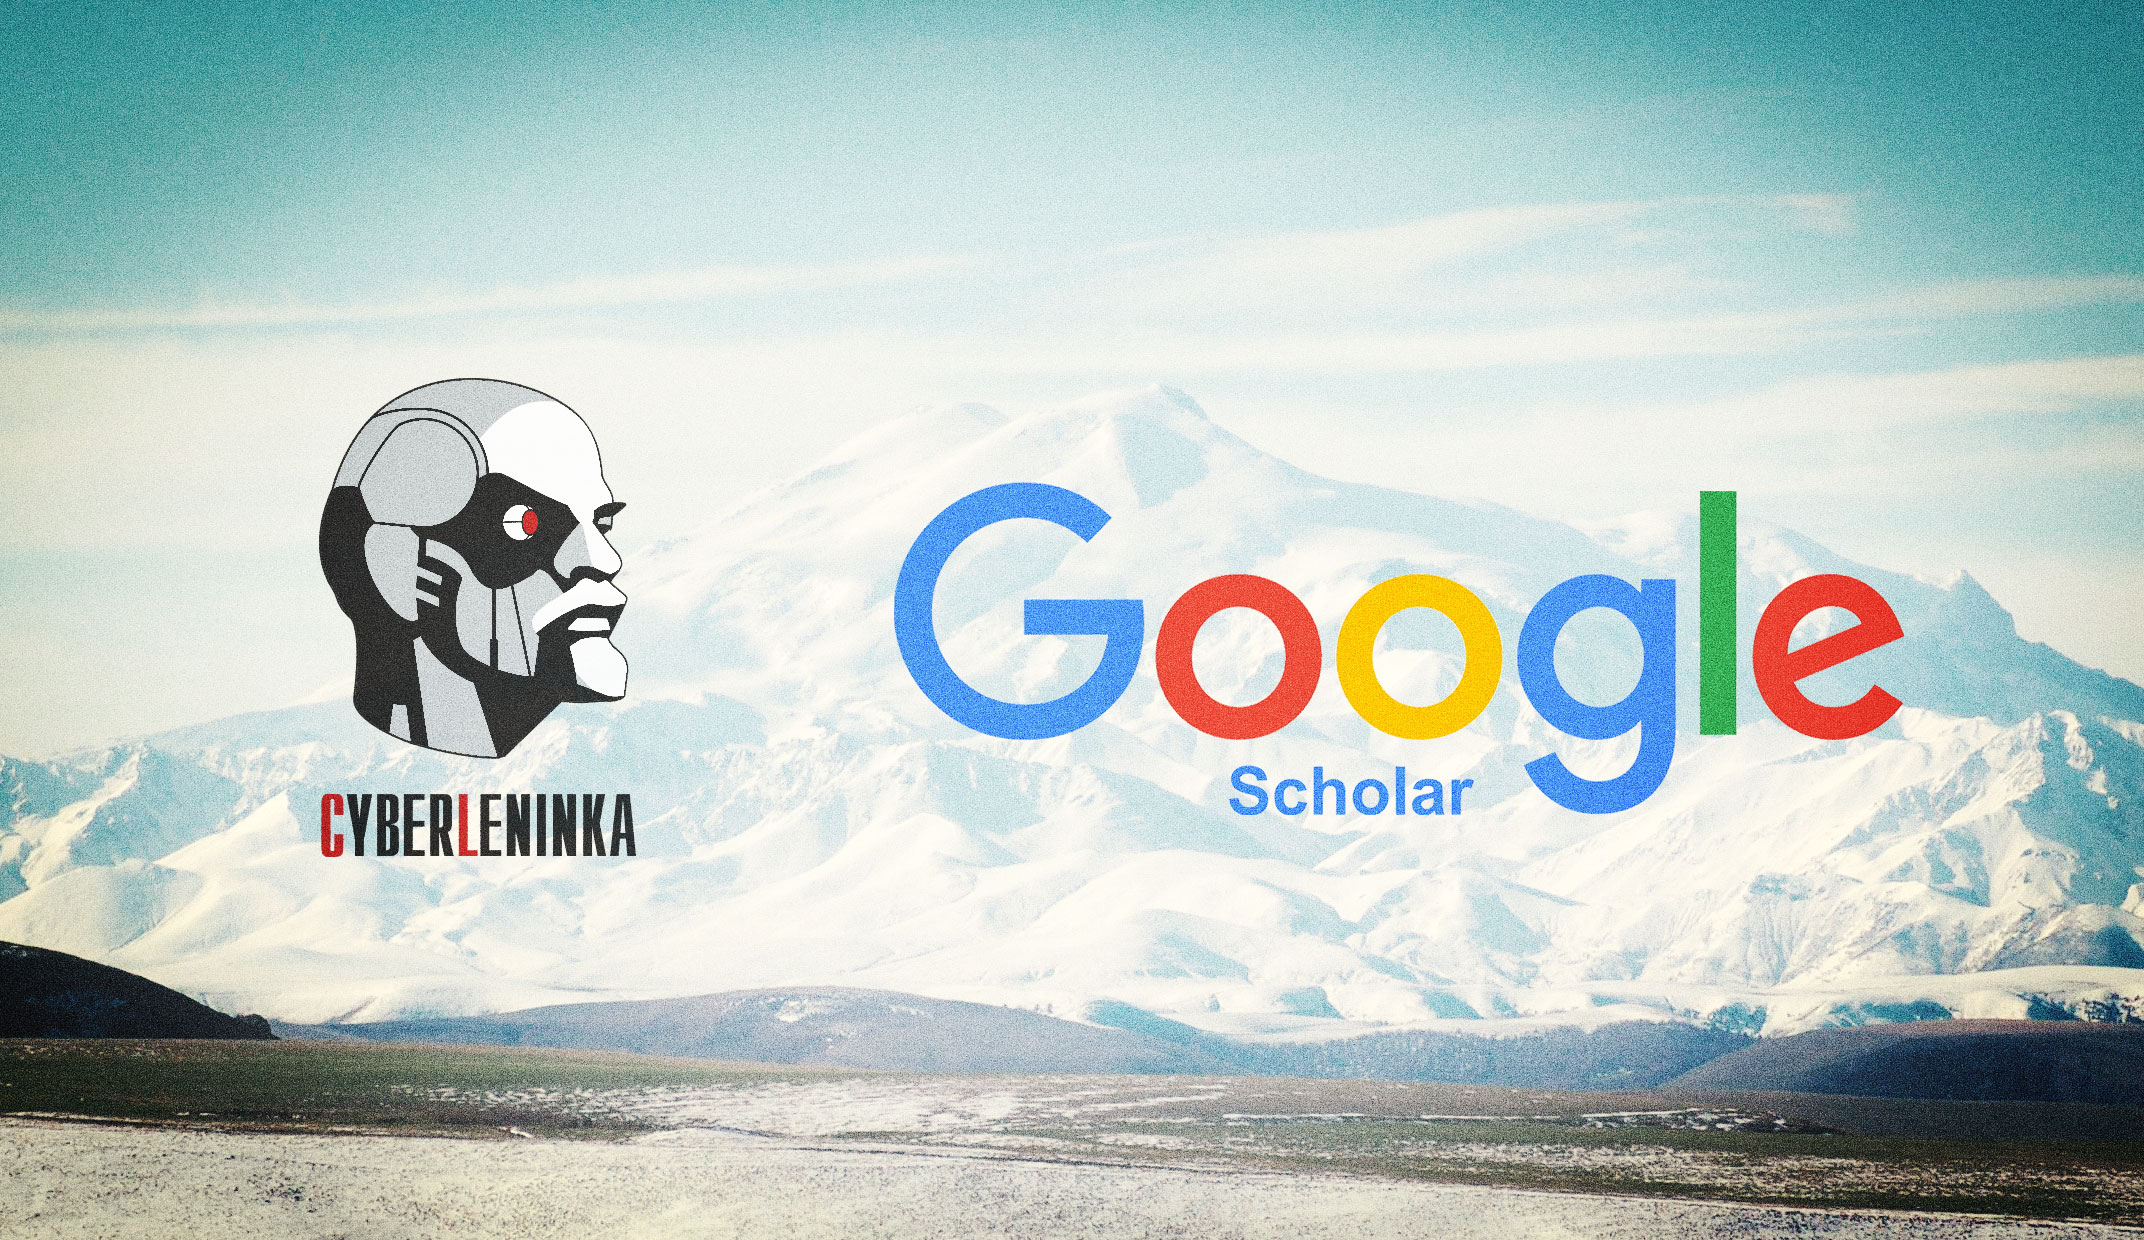 Google Scholar + CyberLeninka